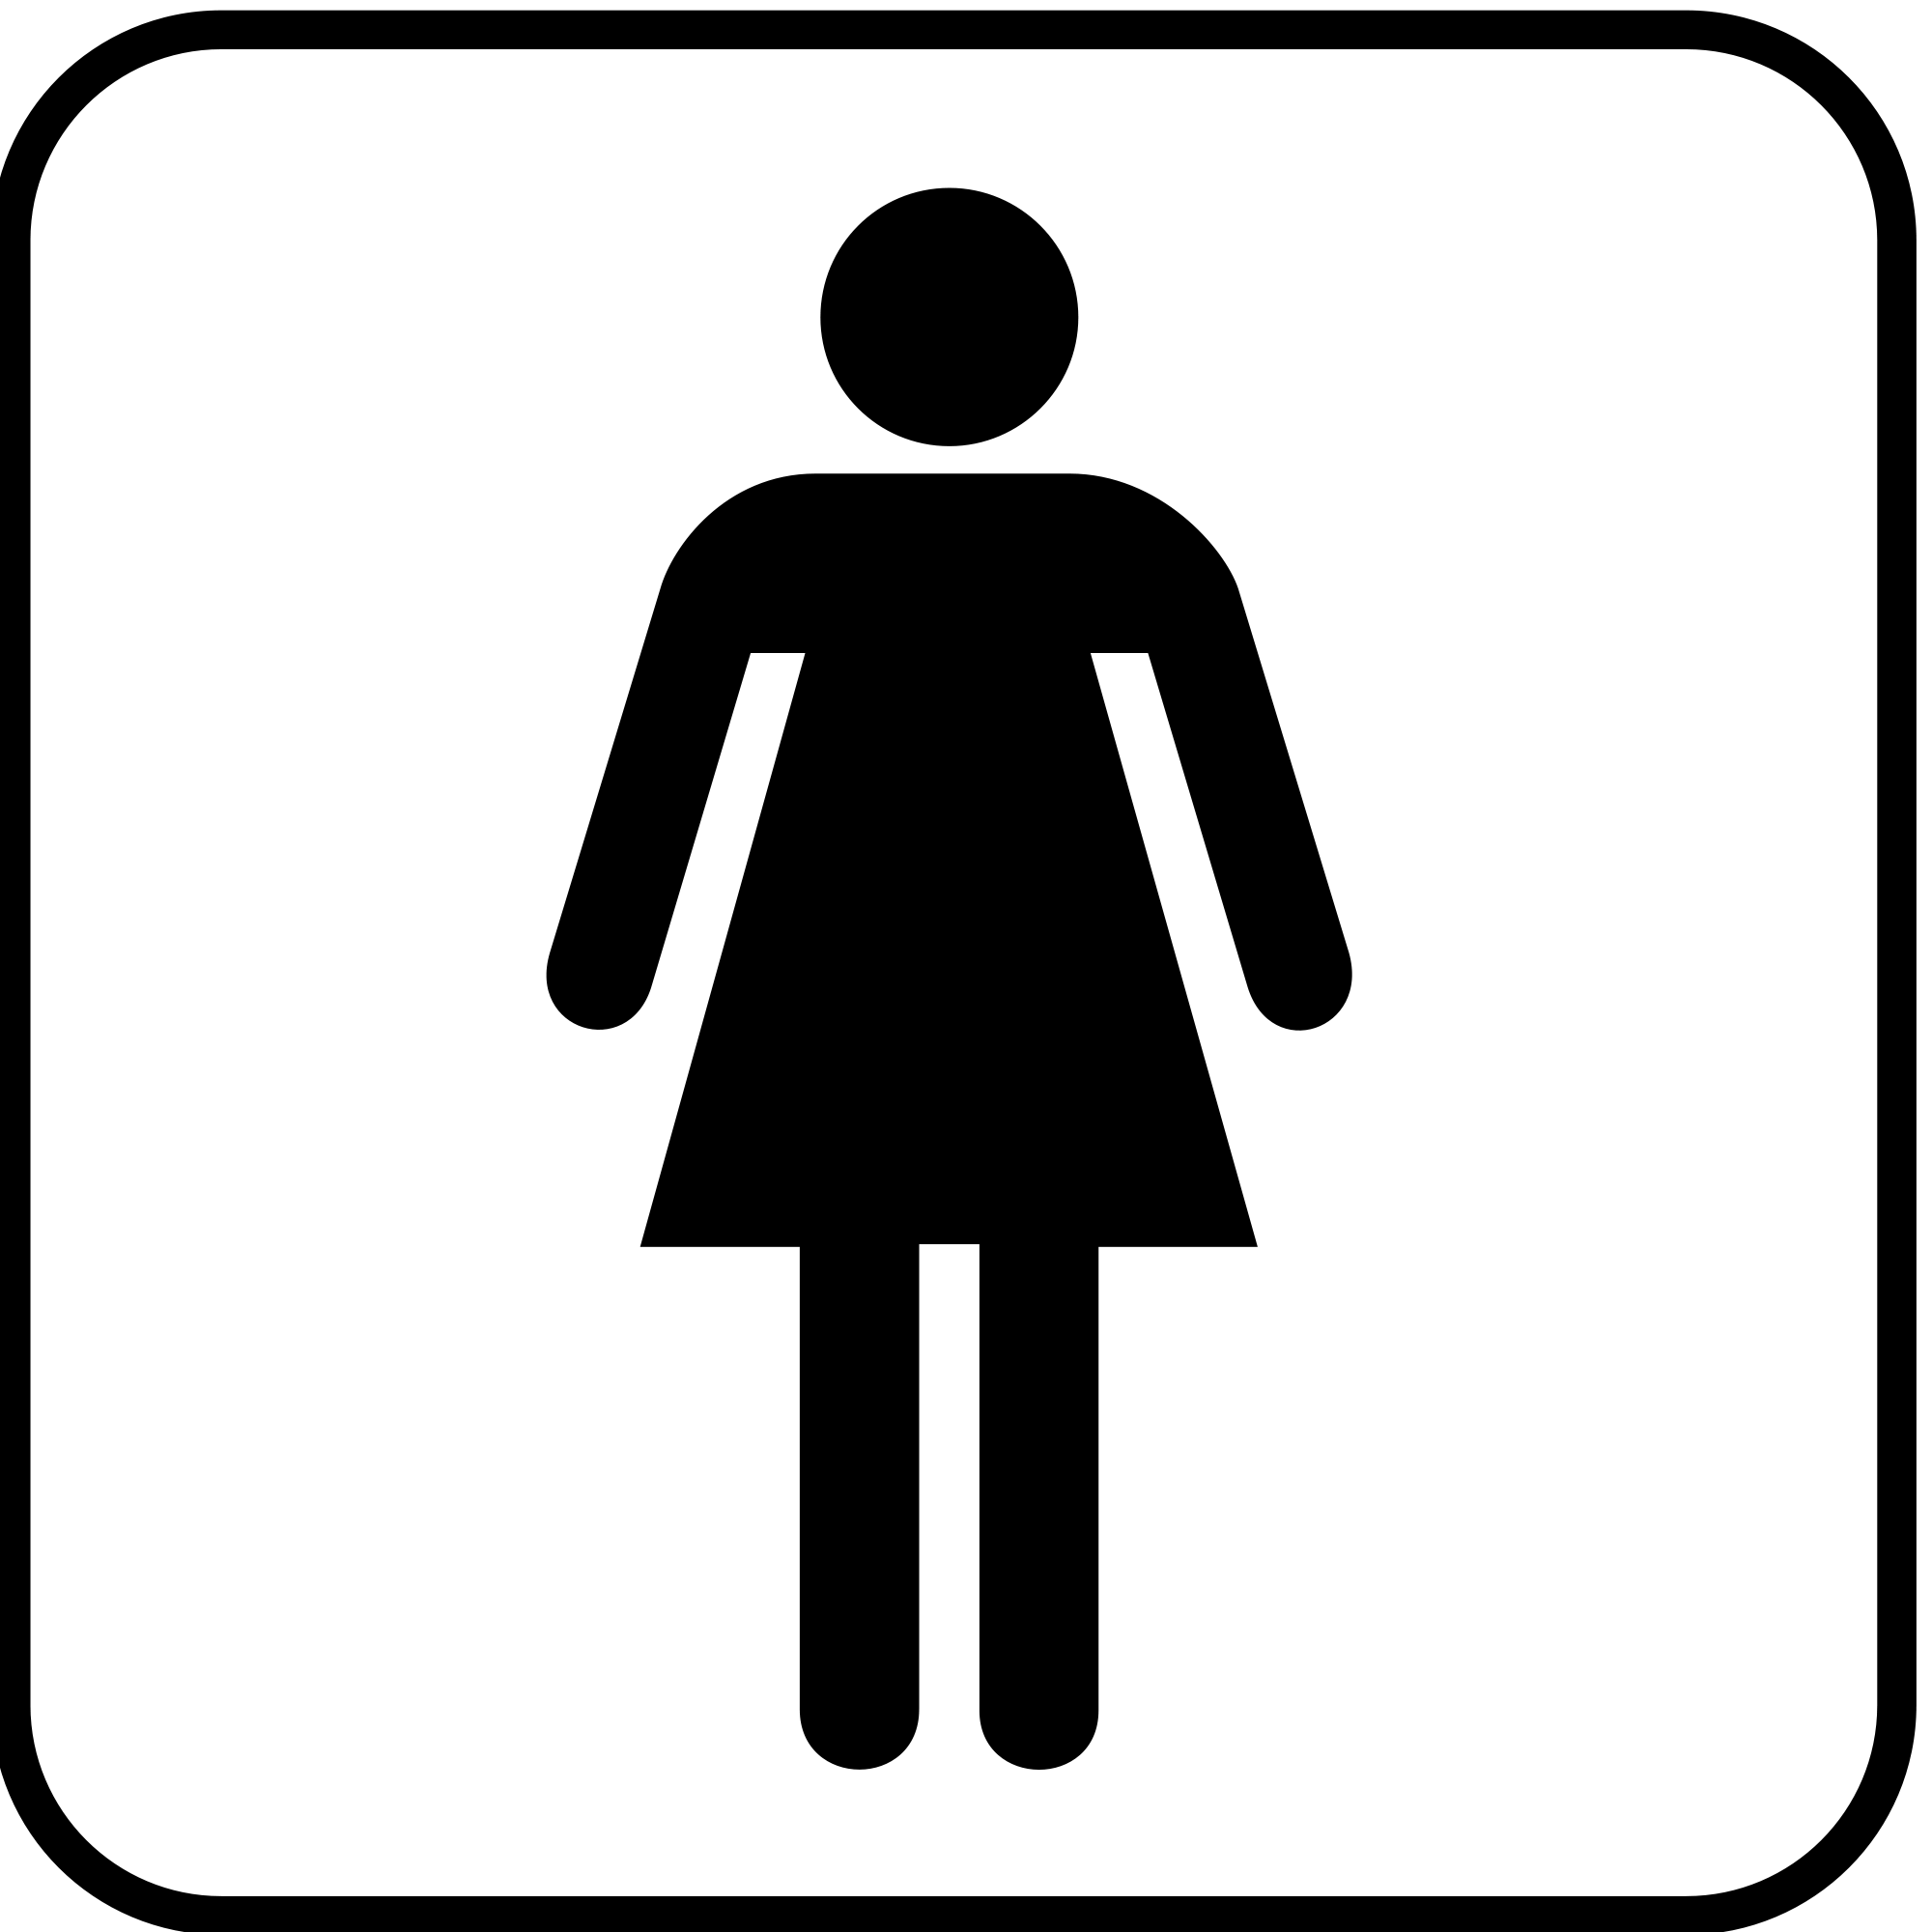 Restroom Symbols Pictograms - ClipArt Best